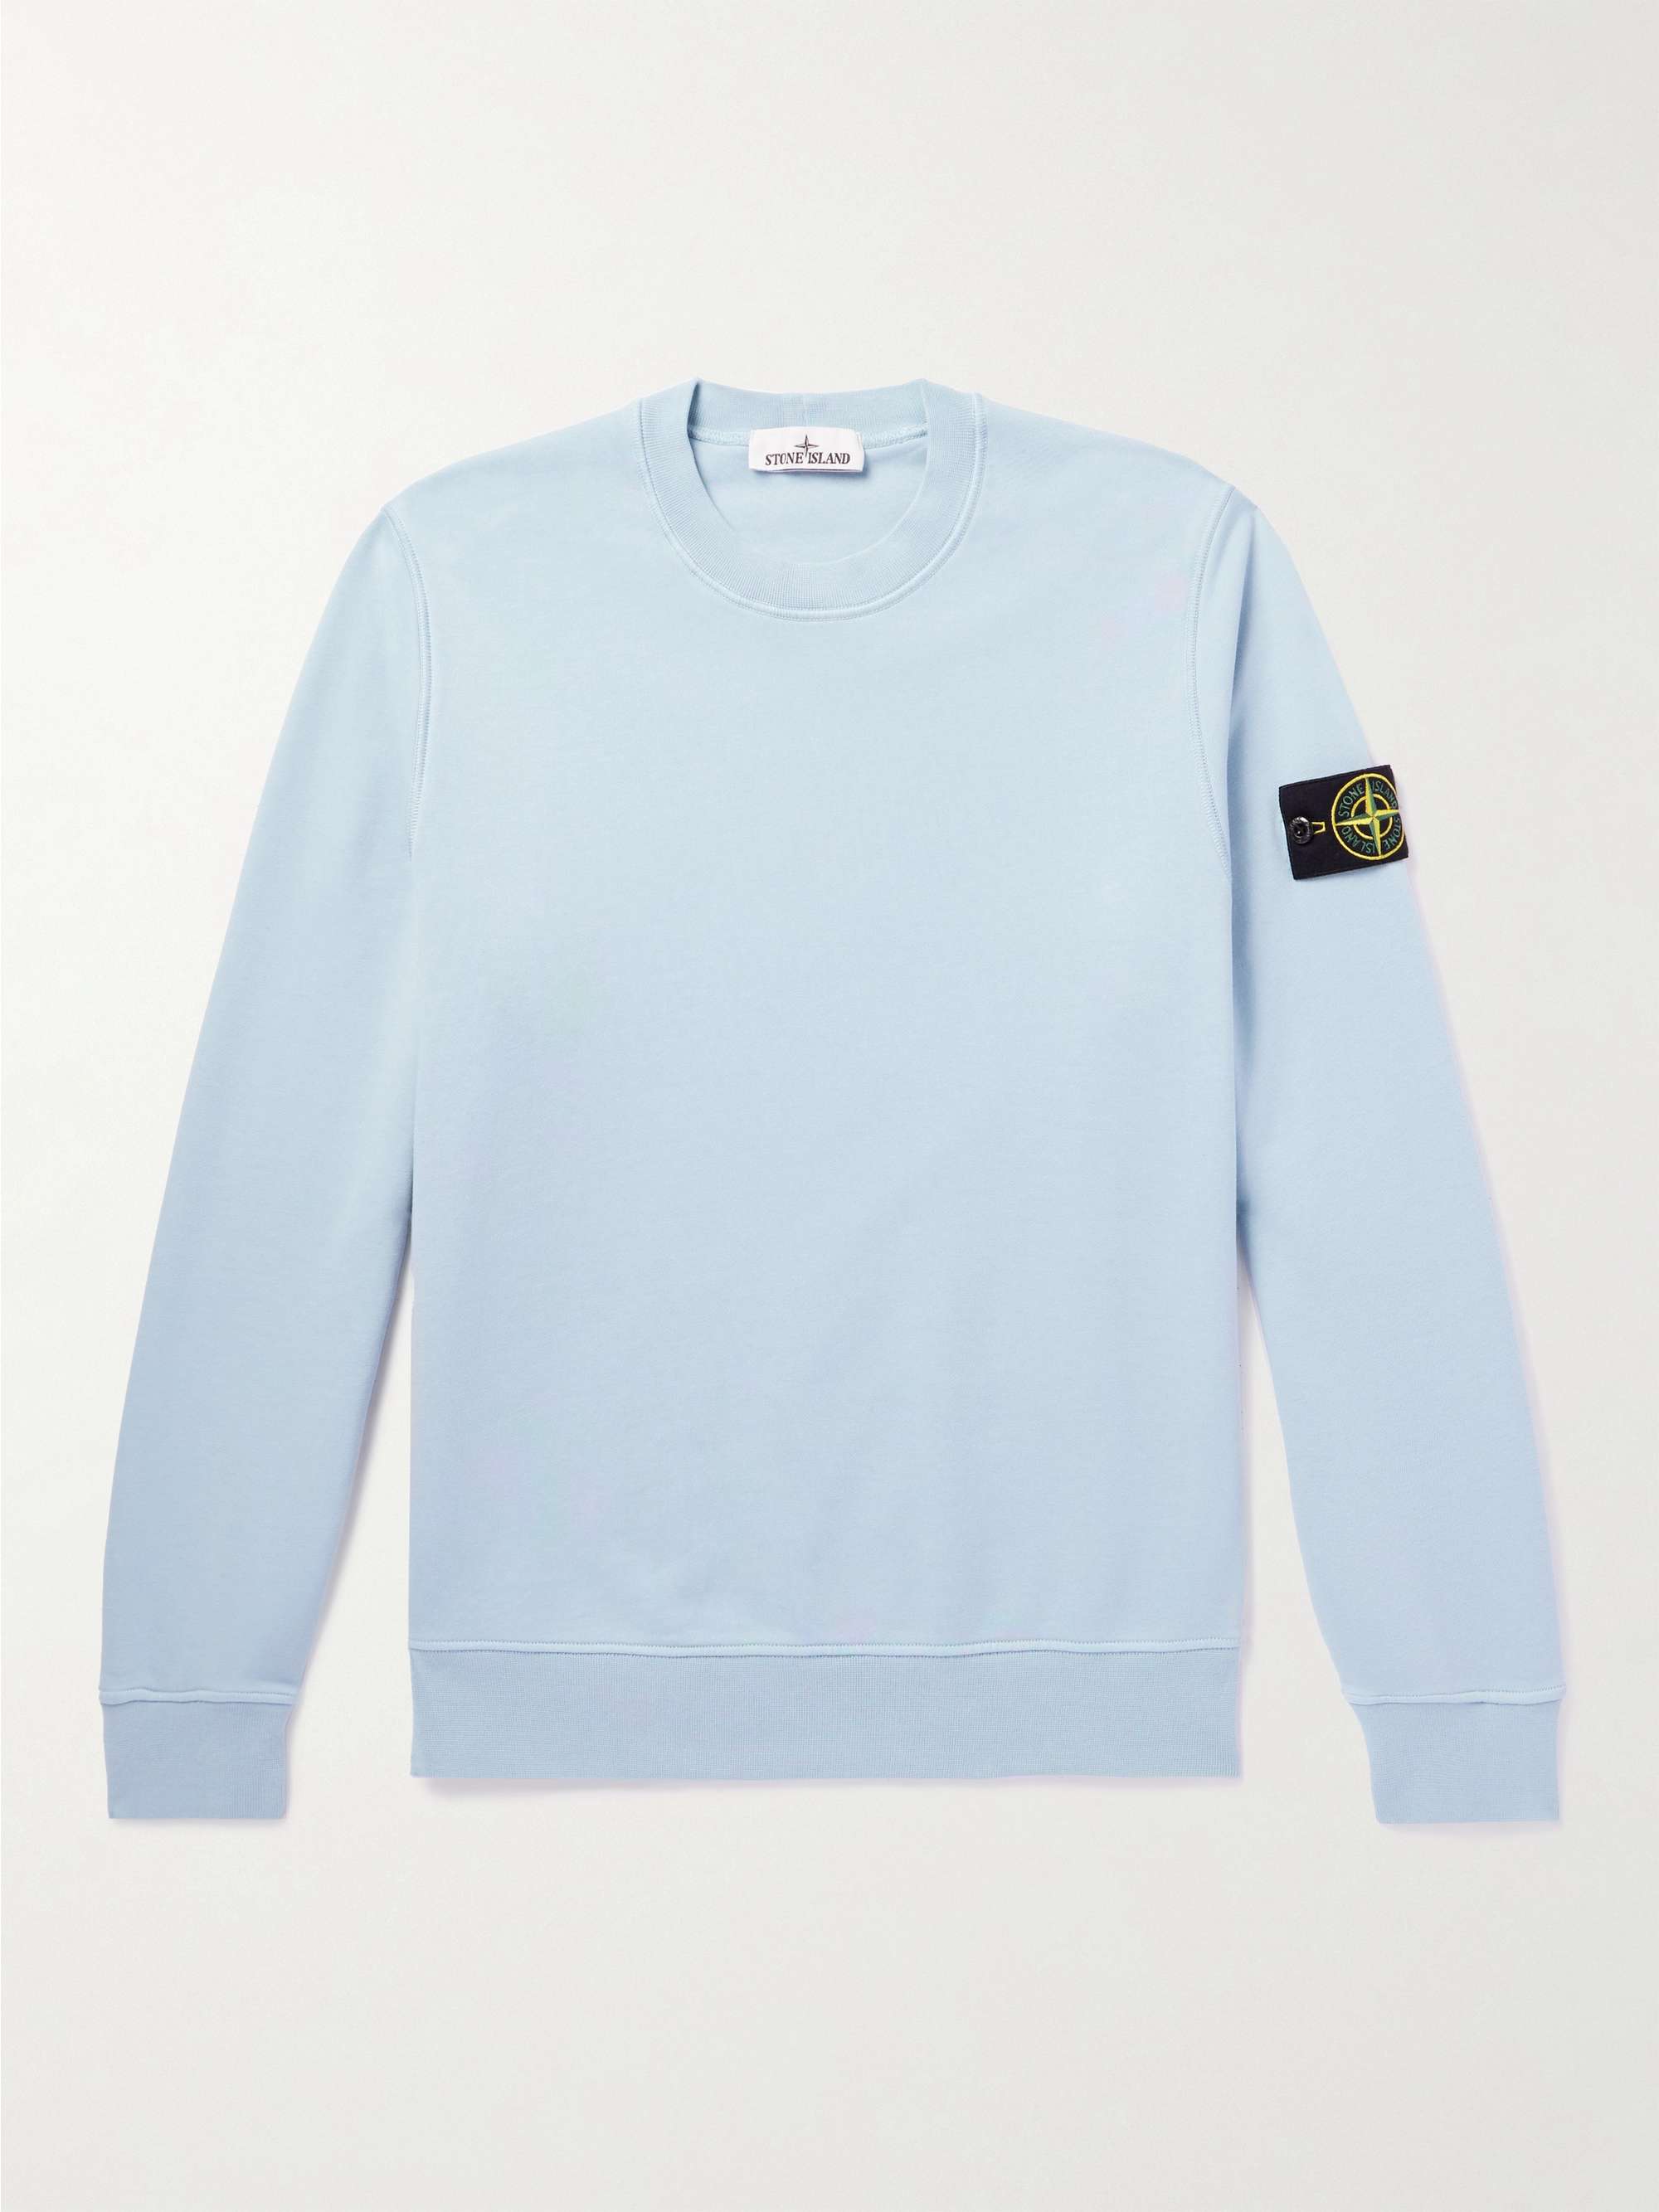 STONE ISLAND Logo-Appliquéd Cotton-Jersey Sweatshirt for Men